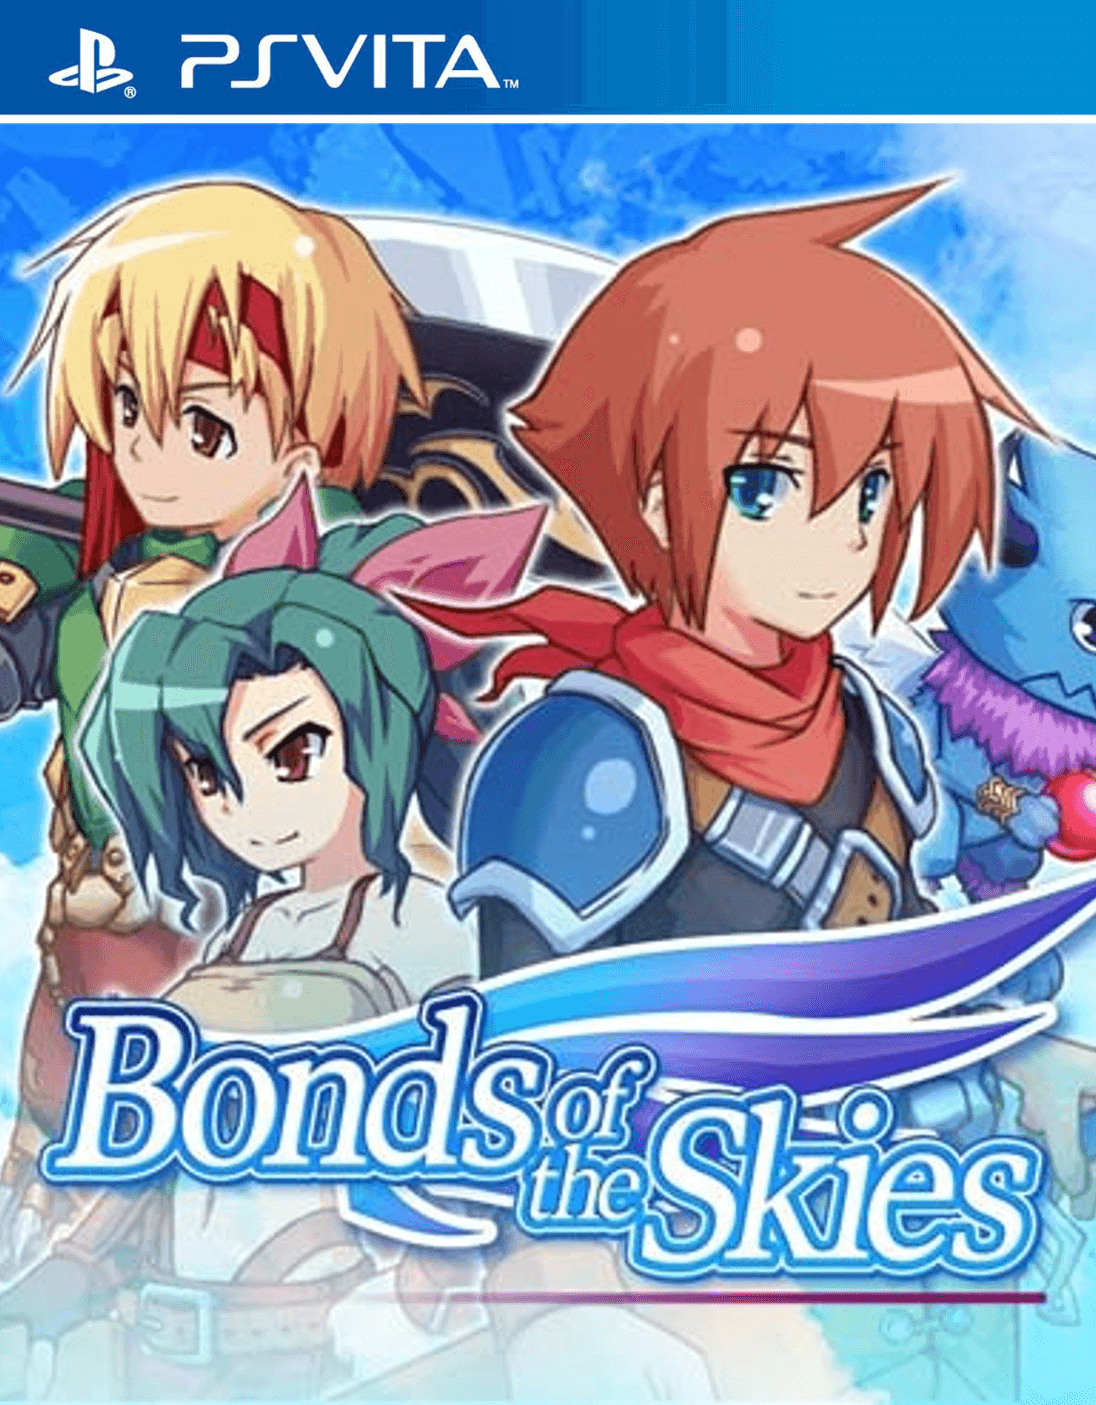 Bonds of the Skies